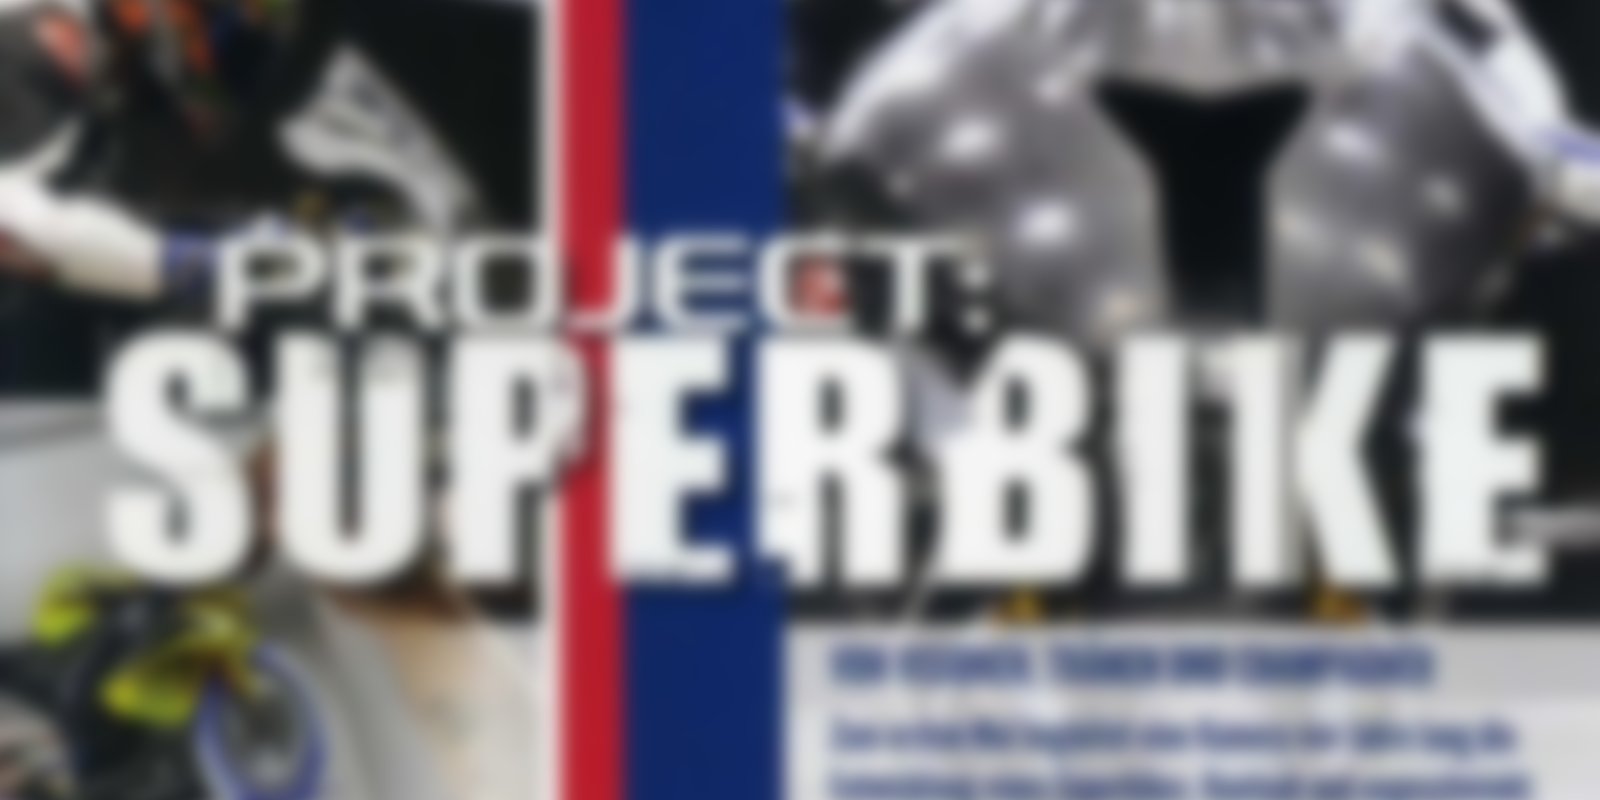 Project Superbike